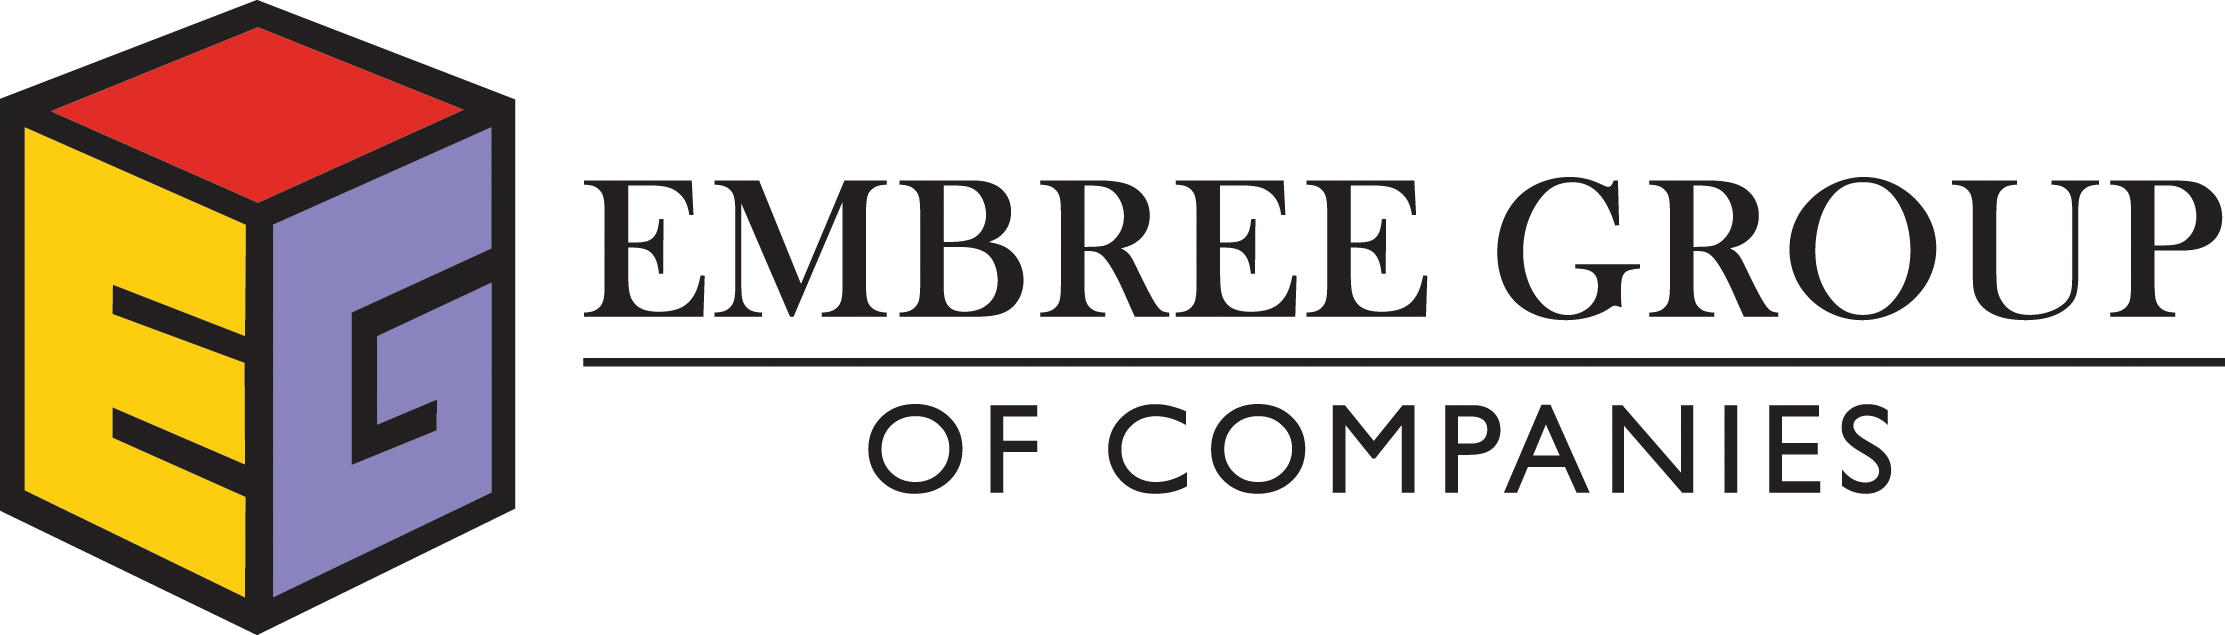 Embree Group of Companies Company Logo